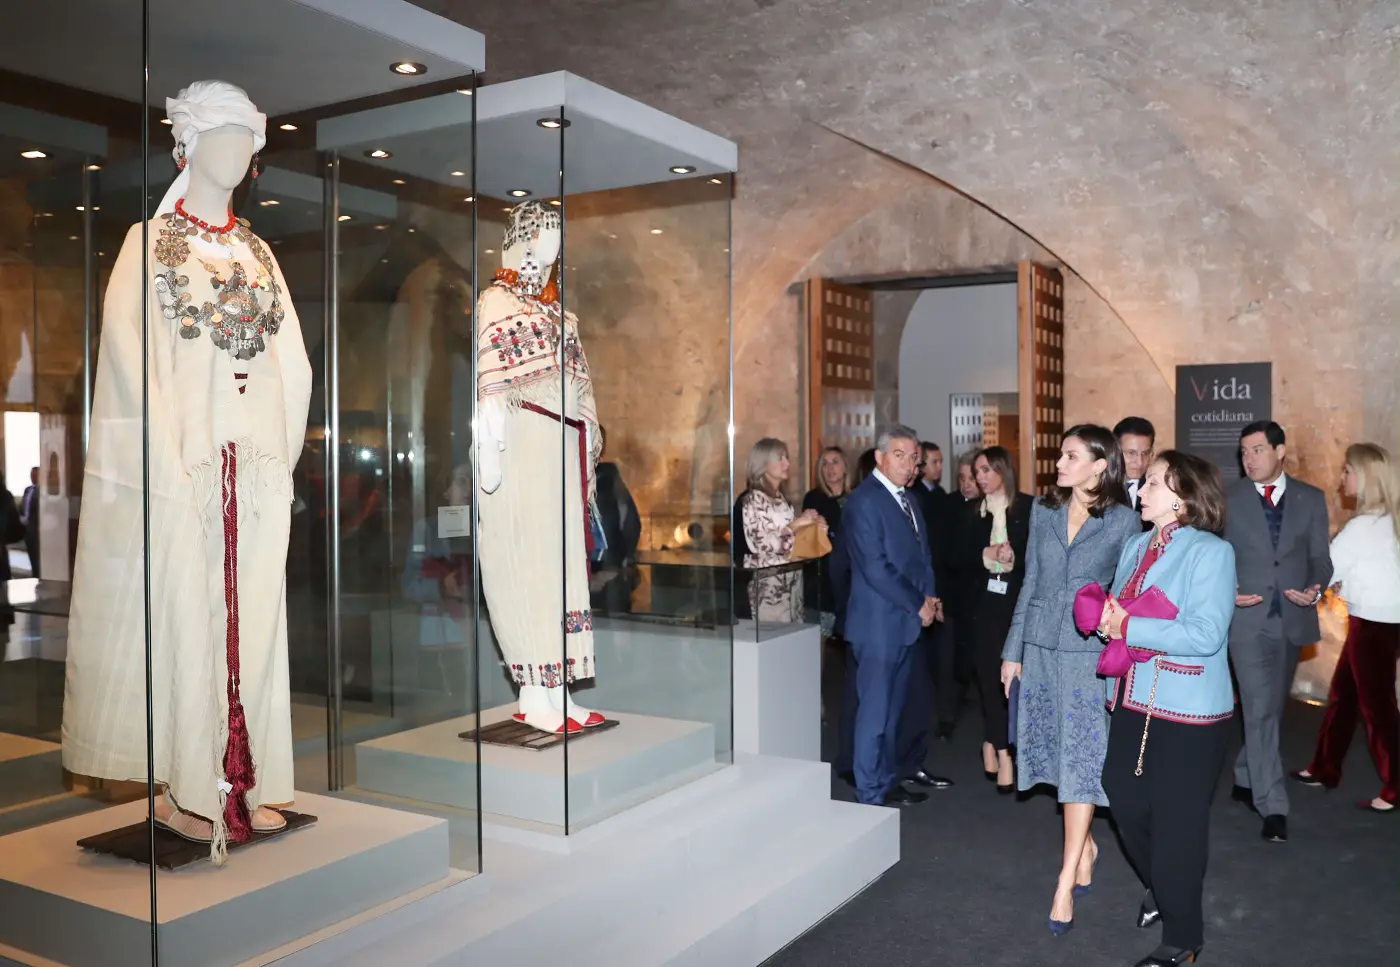 Queen Letizia of Spain in Tweed suit for Granada zirí Exhibition in Granada